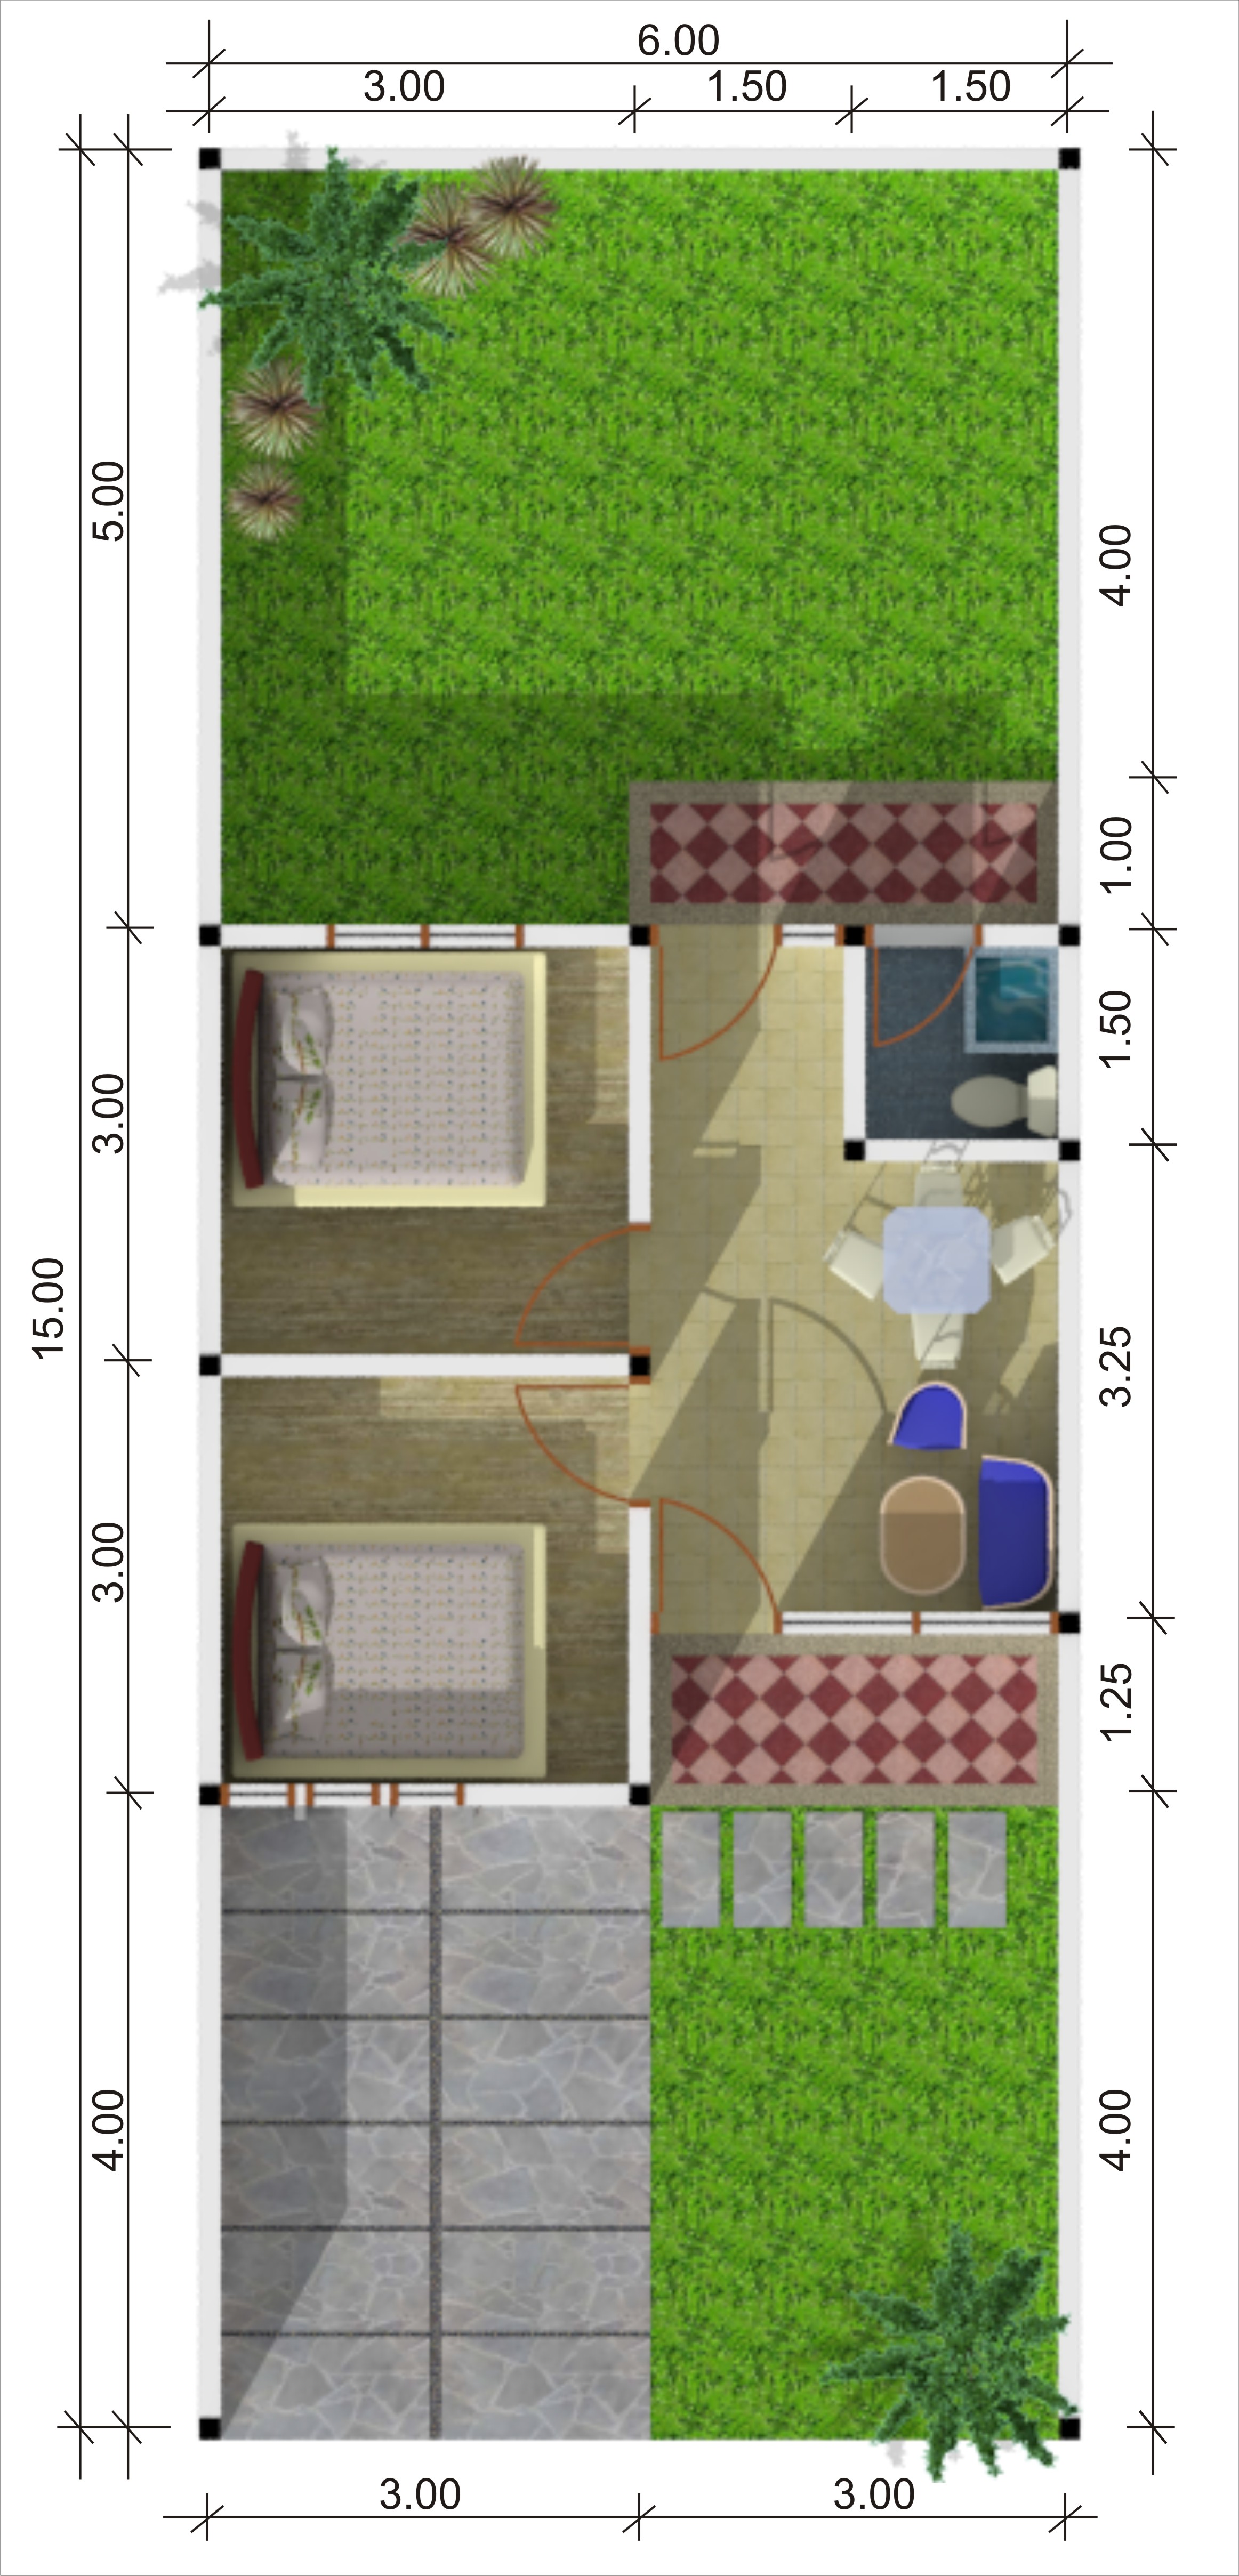 Informasi Desain Rumah Minimalis 2 Lantai Ukuran 6x7 Prosforjdacom